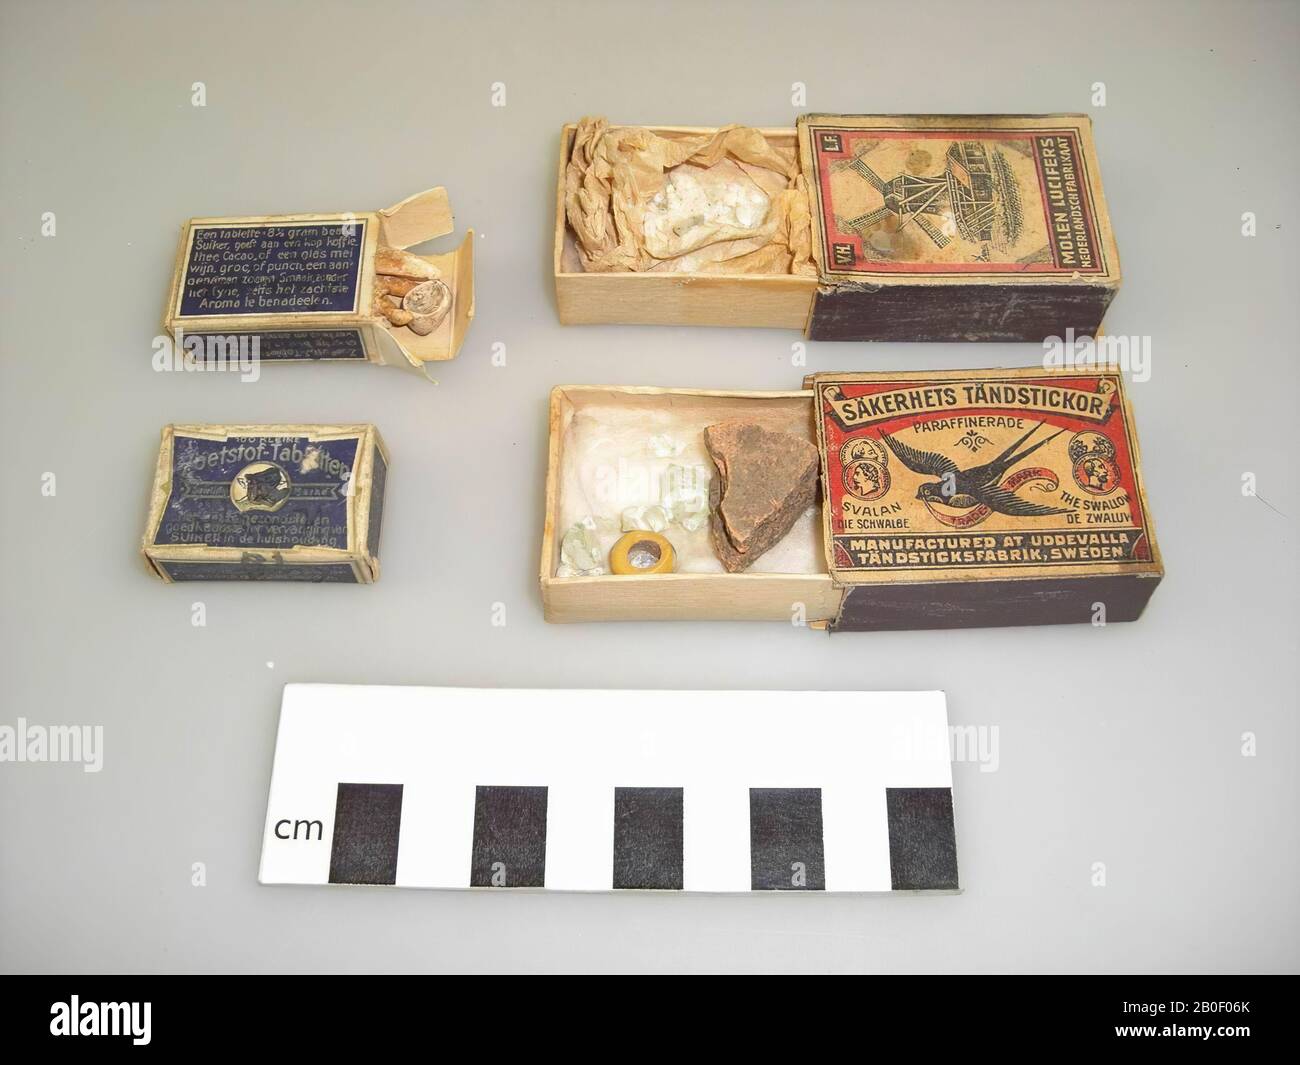 In Säkerhets tändstickor box, fragment, organic, shell, prehistory, Ukraine Stock Photo